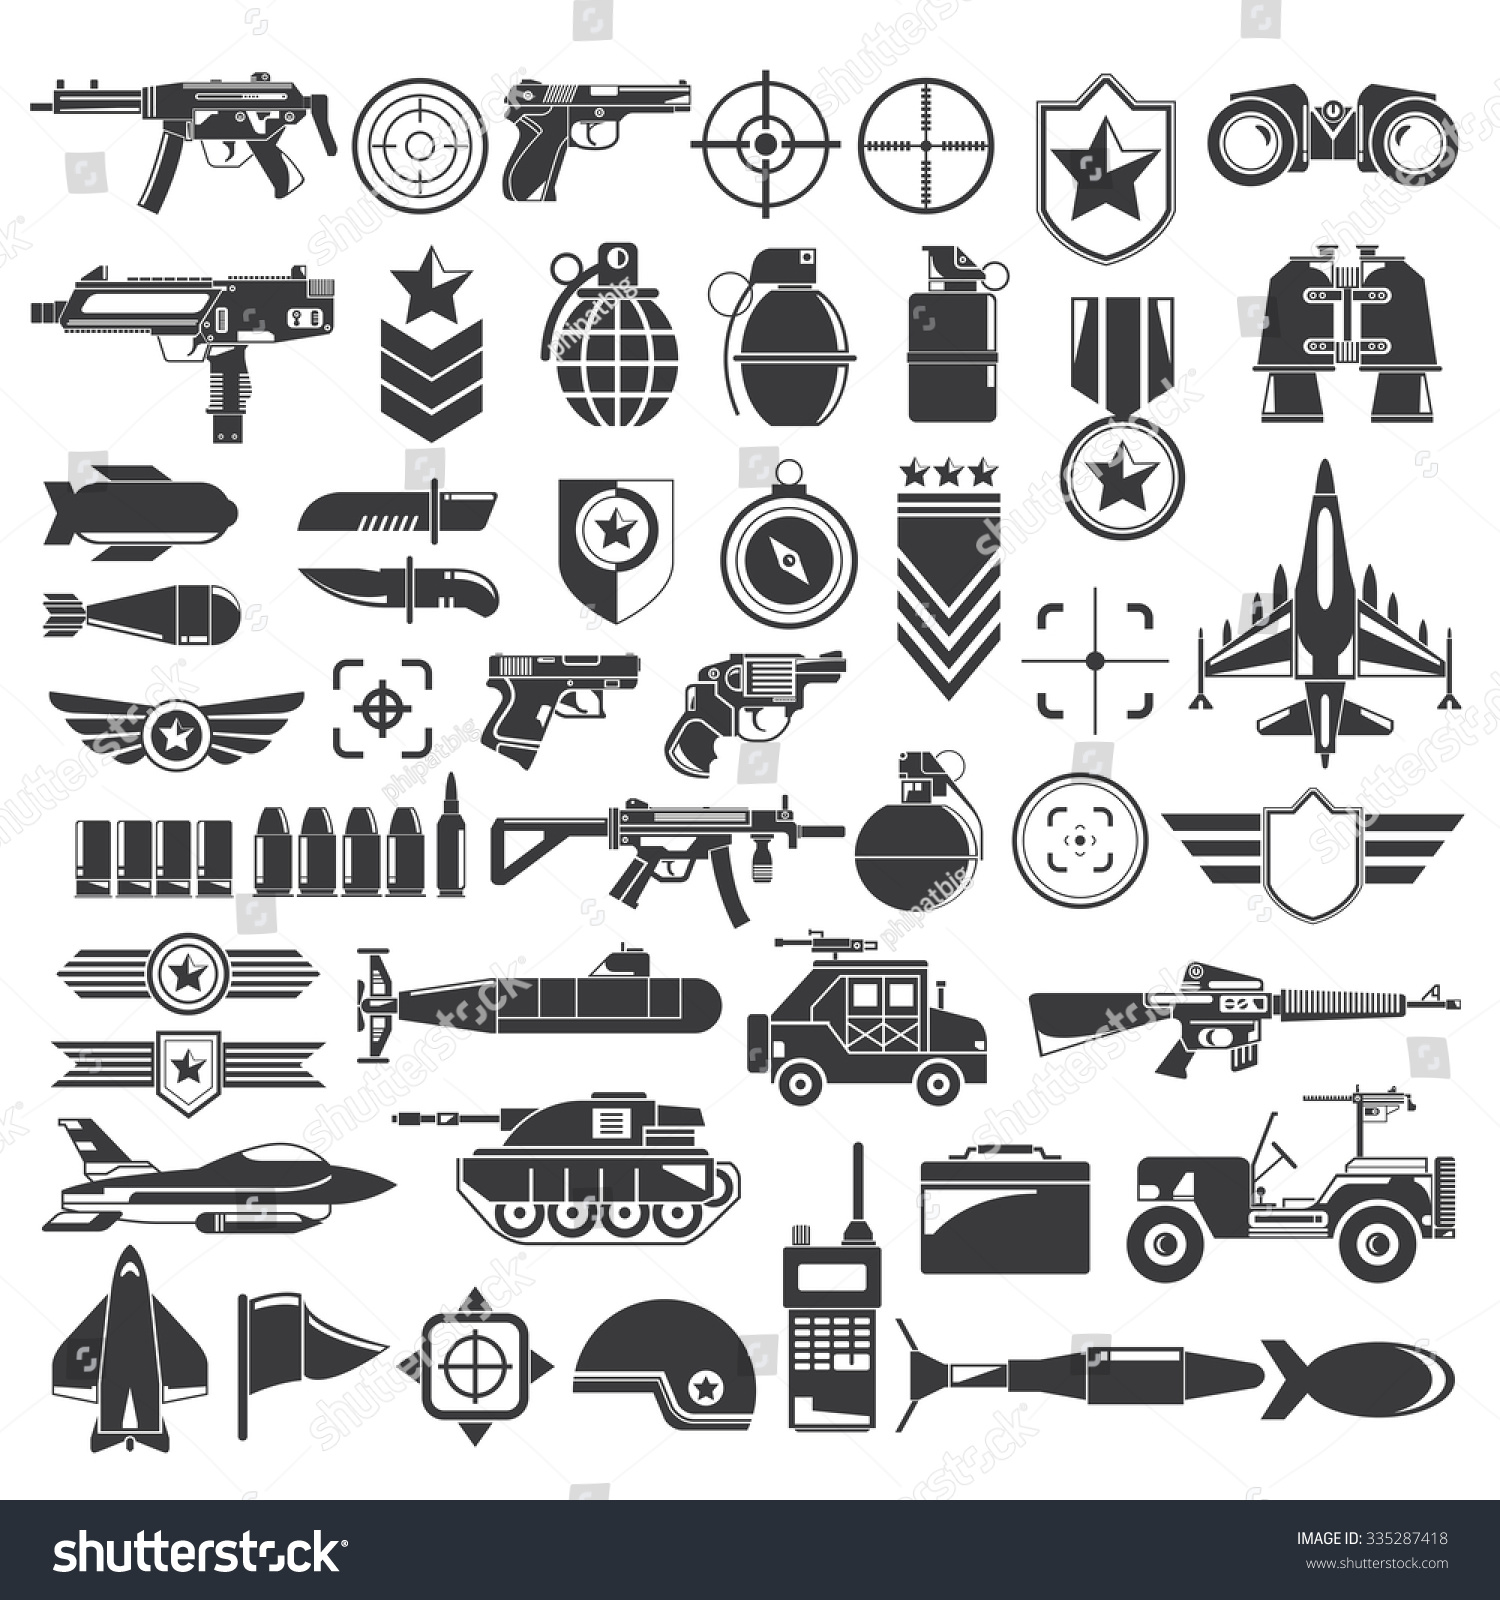 military symbology clip art - photo #45